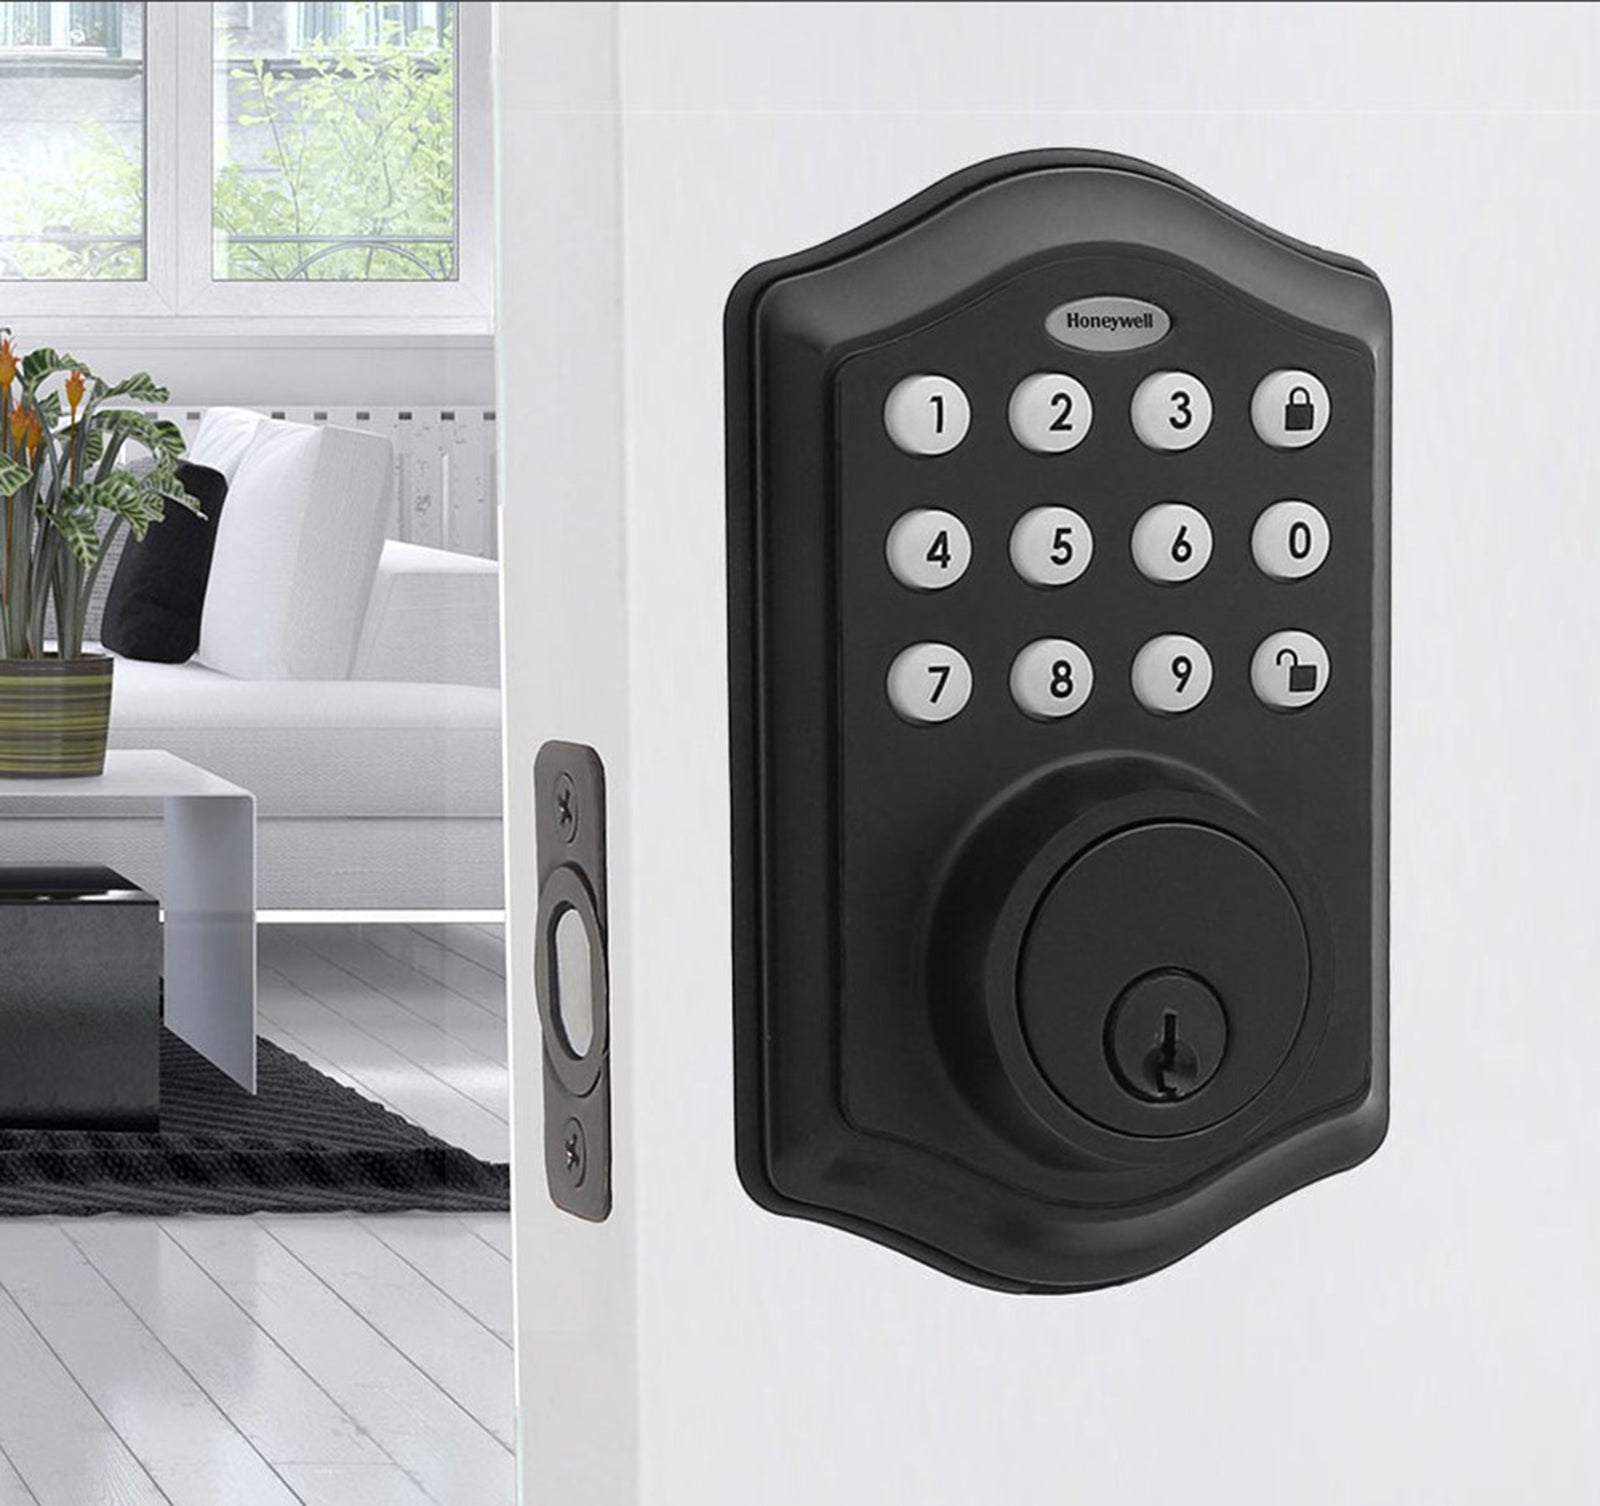 Honeywell 8712509 Electronic Deadbolt Door Lock with Keypad in Matte Black